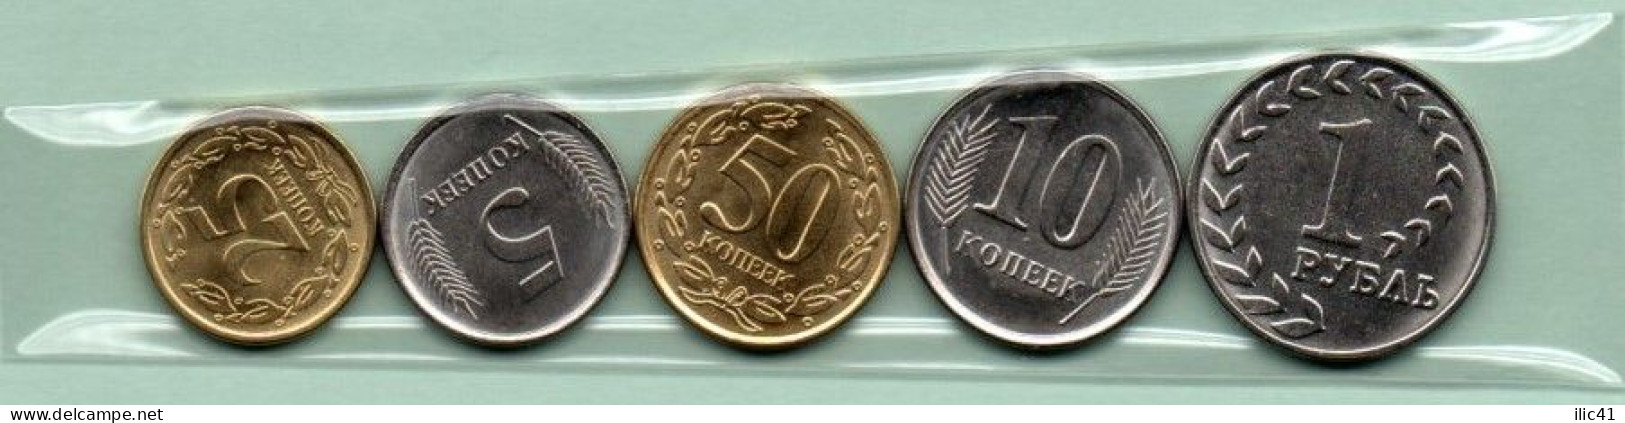 Moldova Moldova Transnistria 2020  Coins  "Change Coins Of Transnistria" UNC - Moldavia